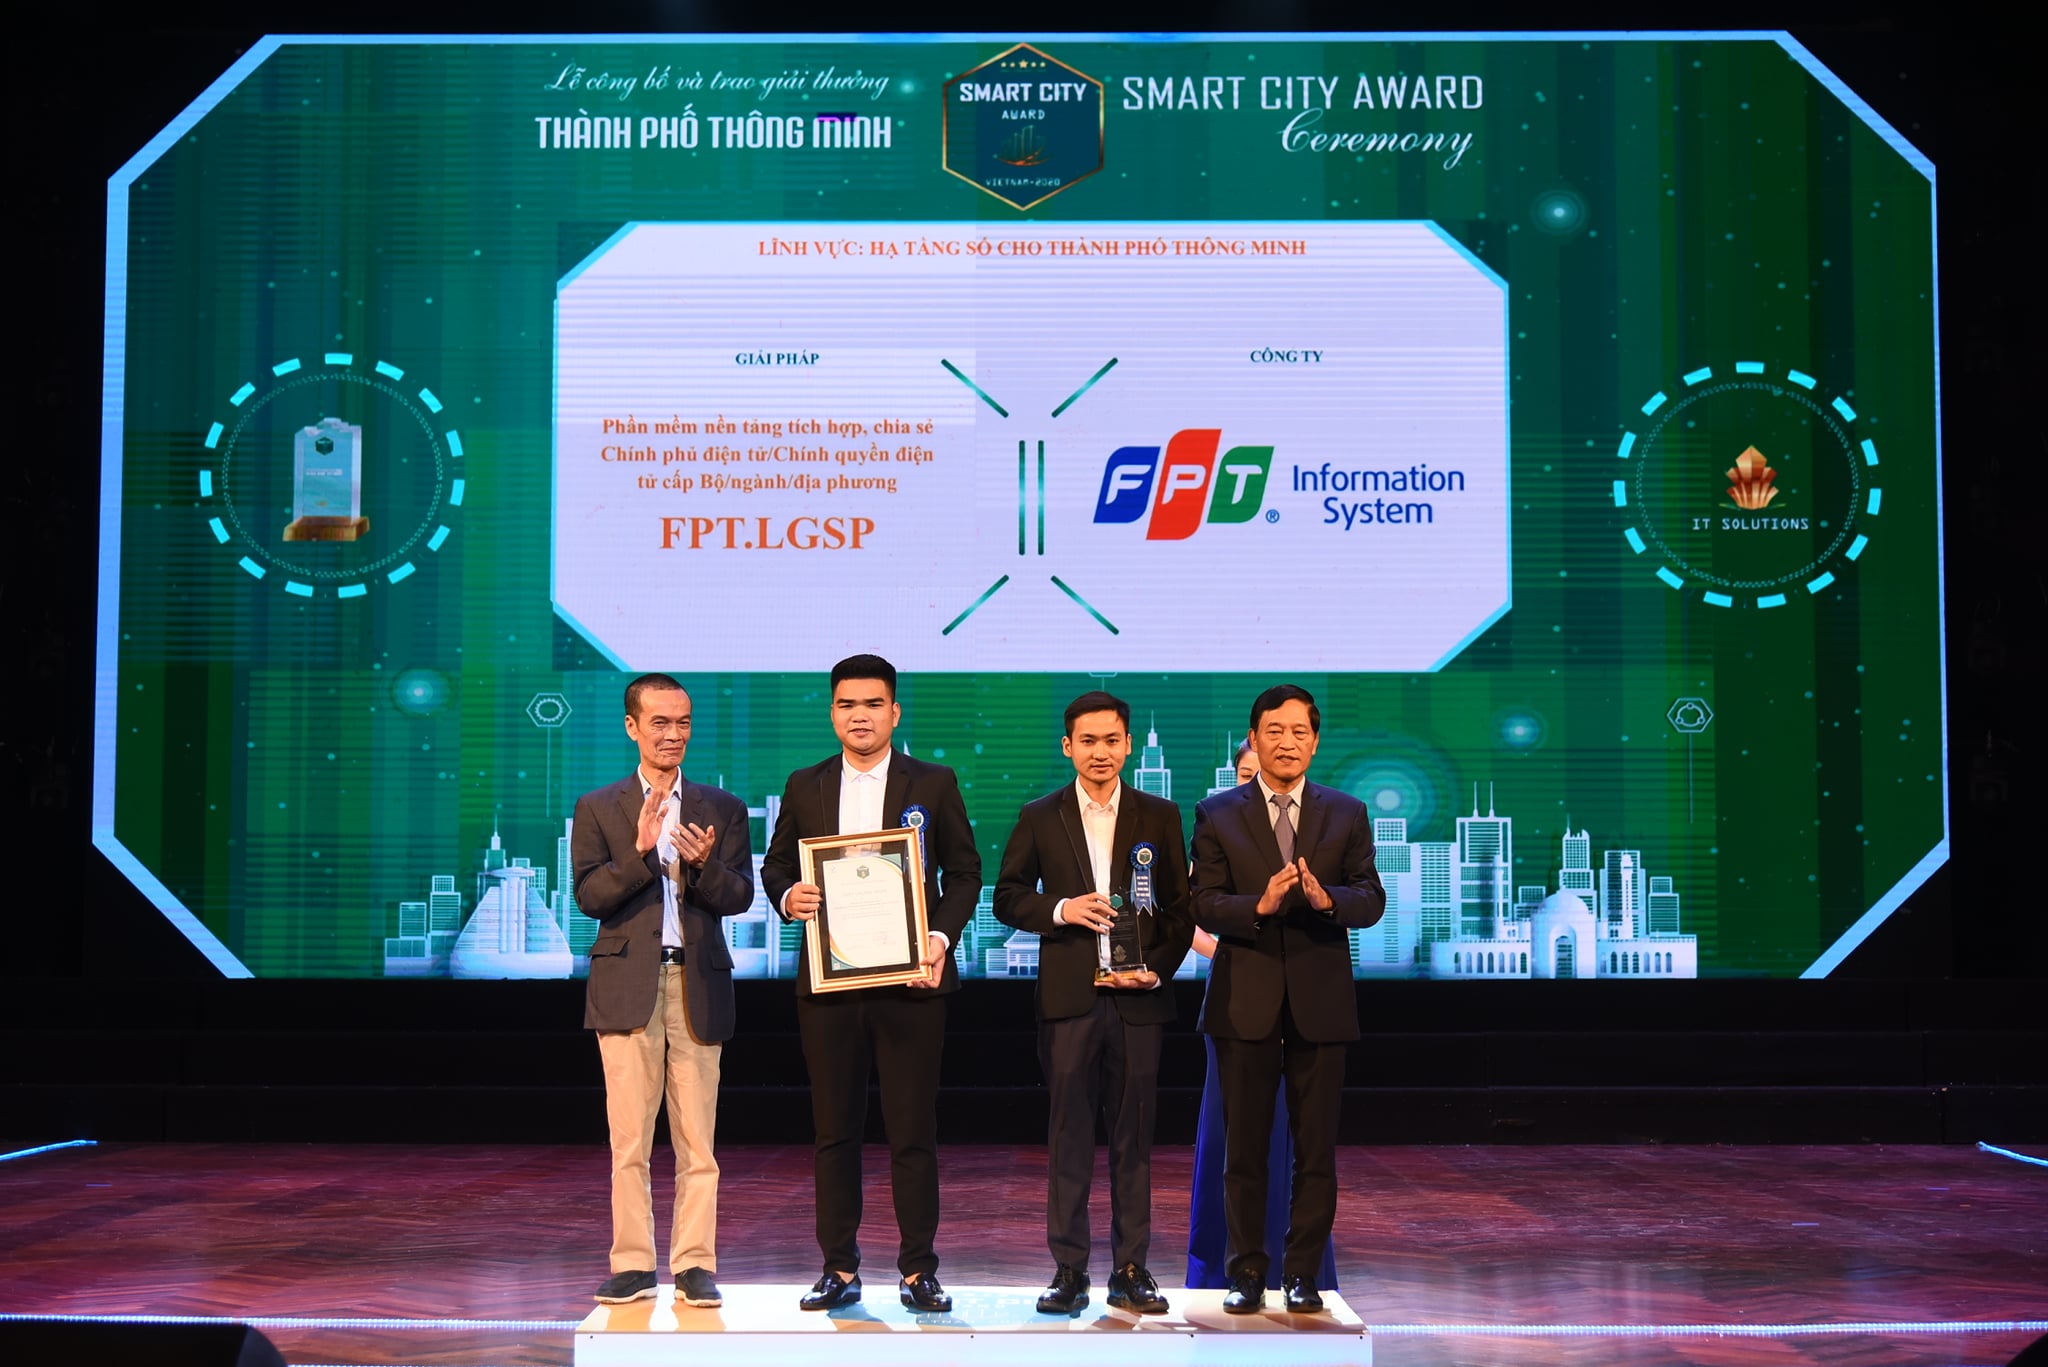 2020 Vietnam Smart City Awards – Local Government Service Platform (FPT.LGSP)